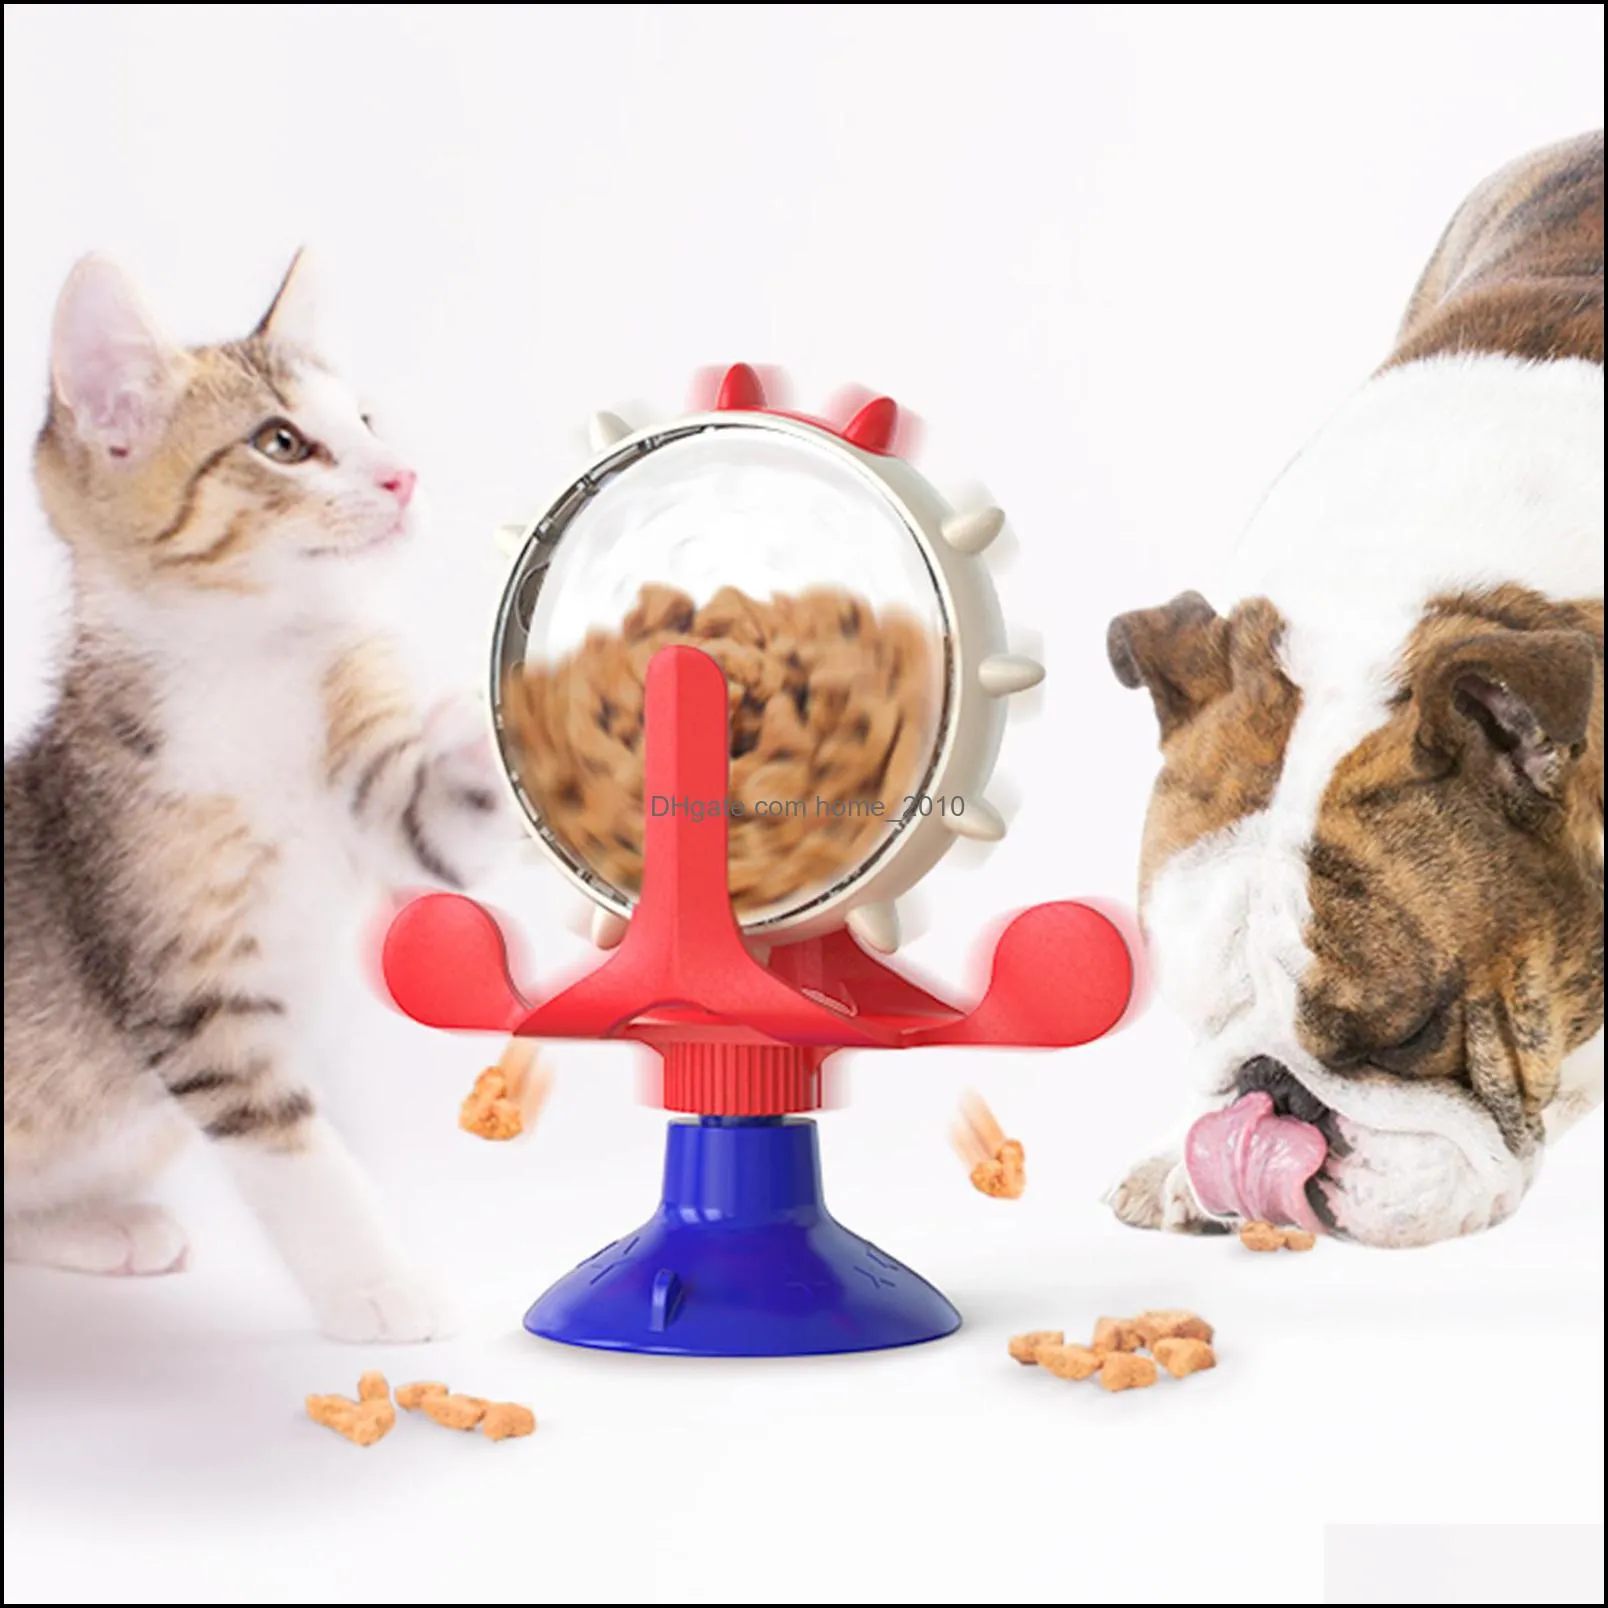 pet cat feeder toy kitten teasing turntable windmill leakage toys training ball 360 rotating feeding toypet accessories wll931